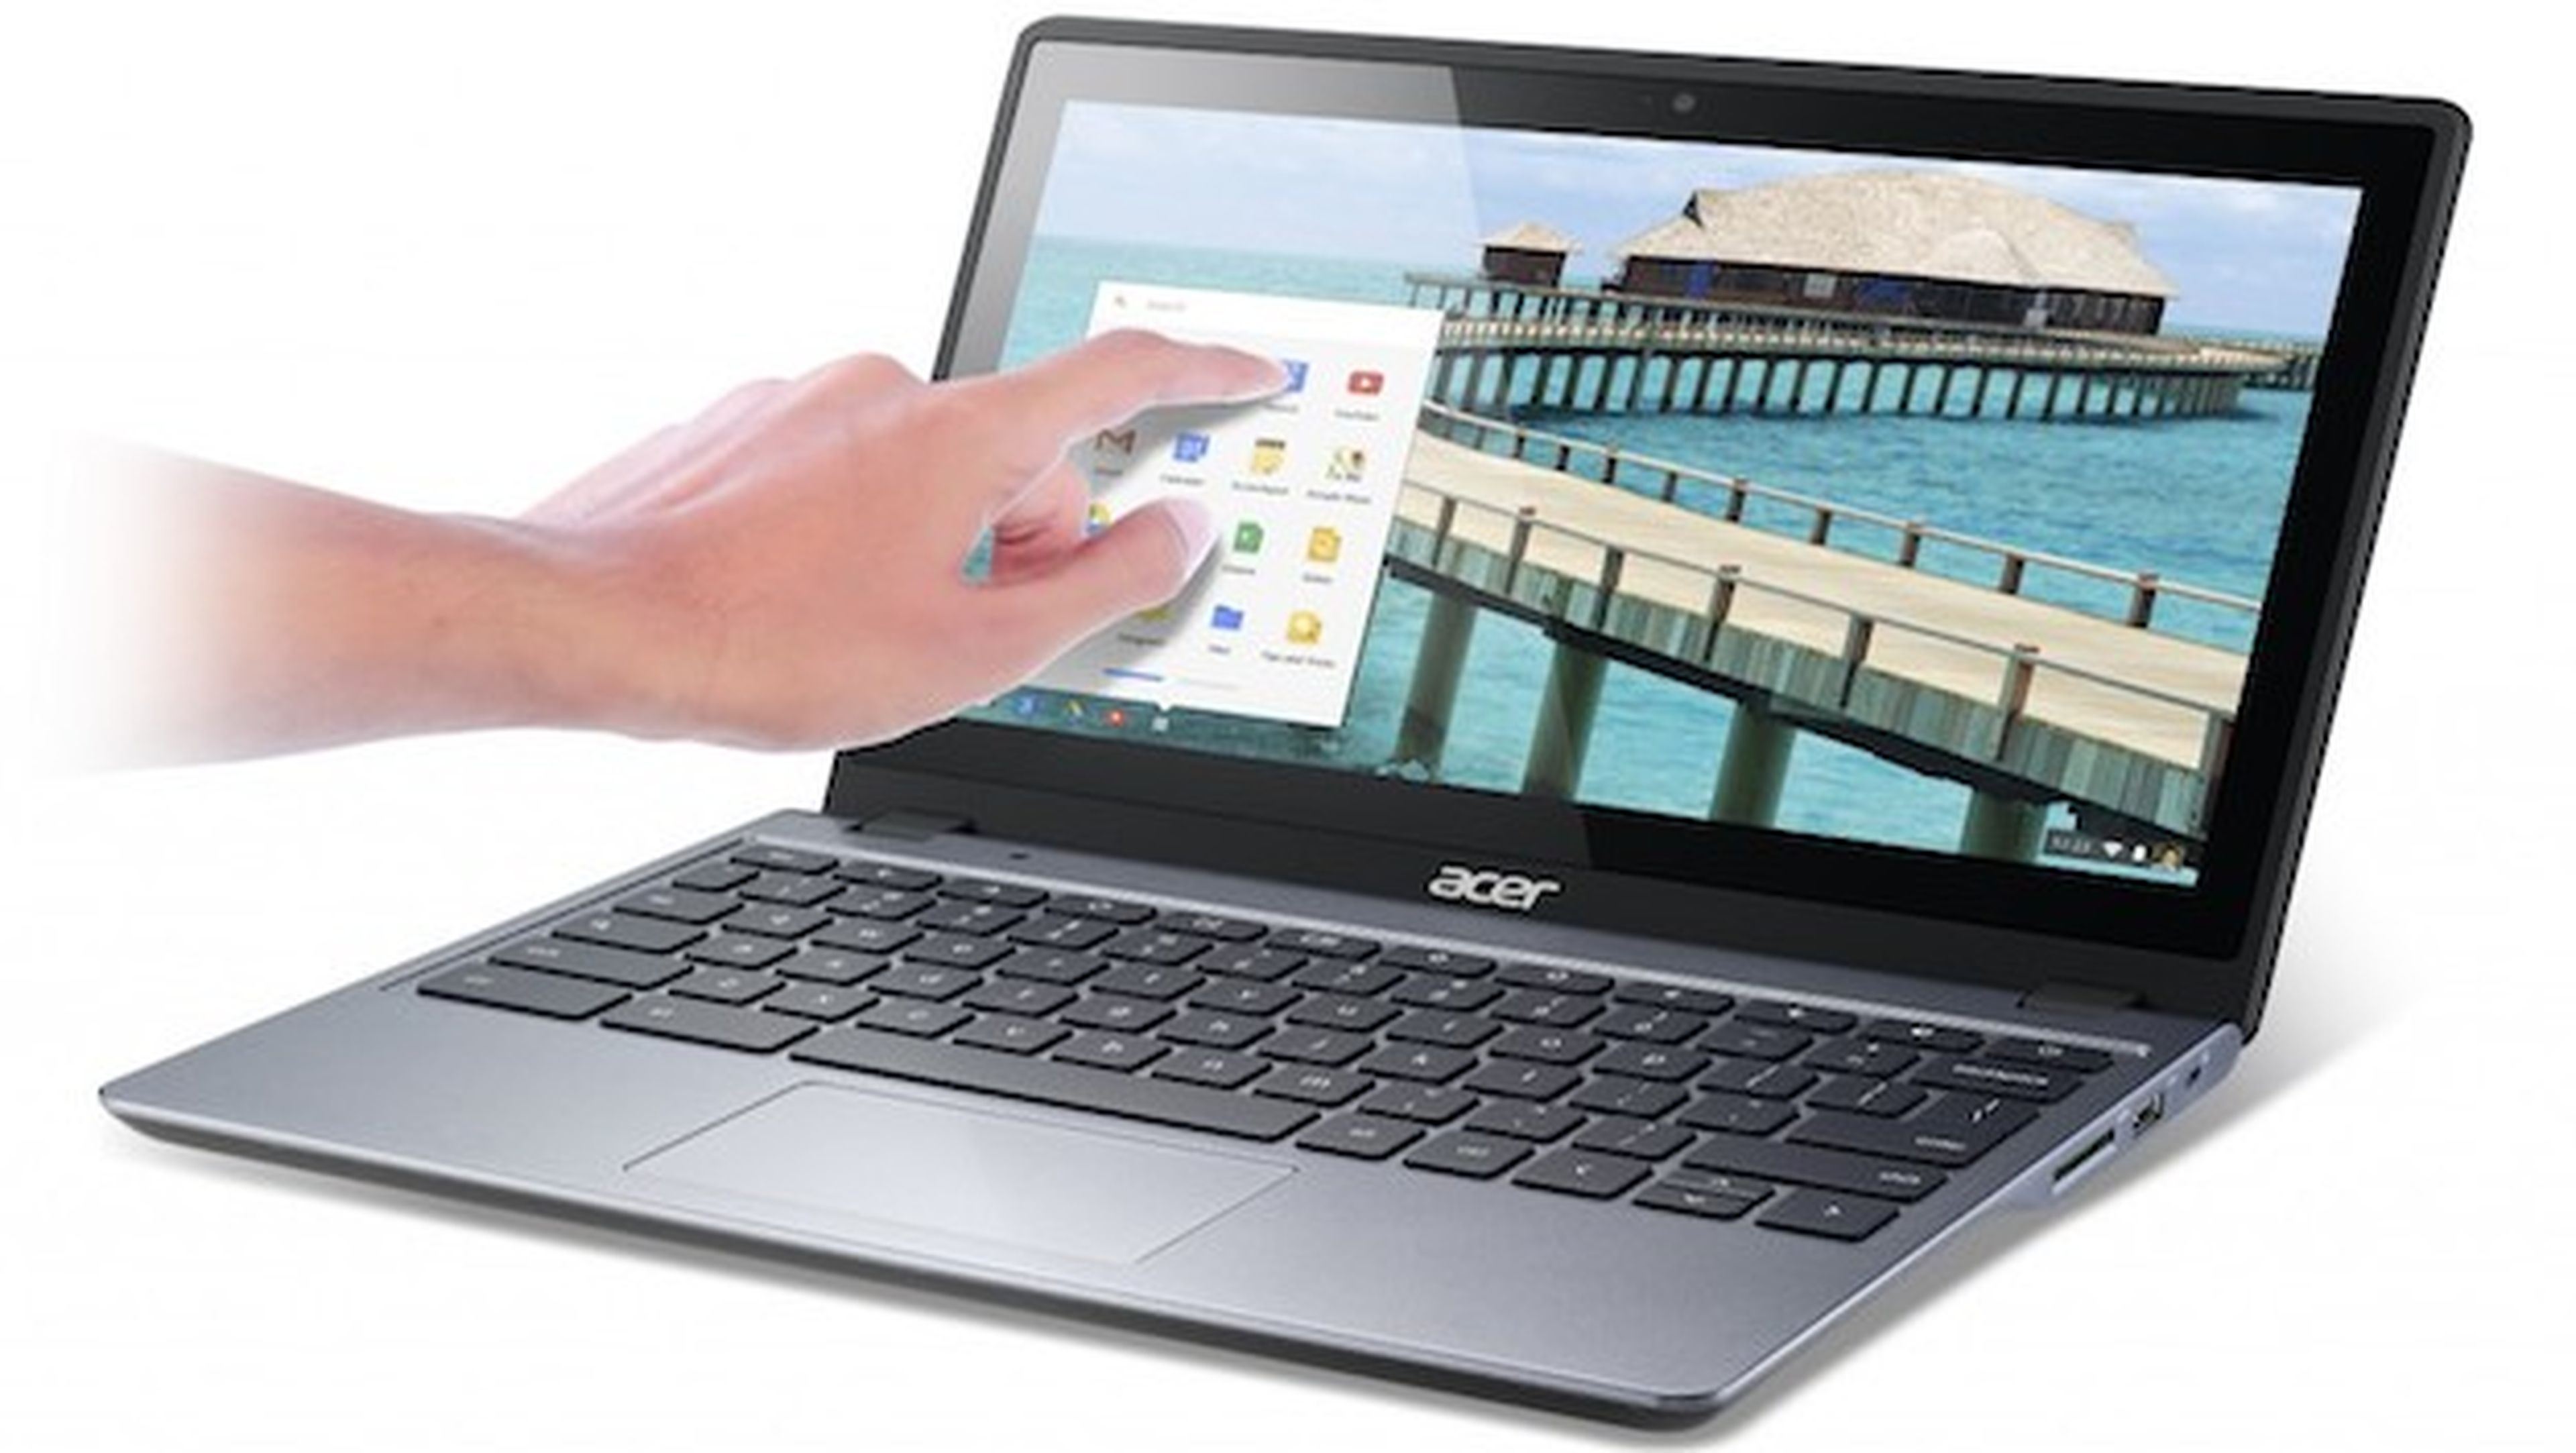 Nueva Acer C720P con pantalla táctil